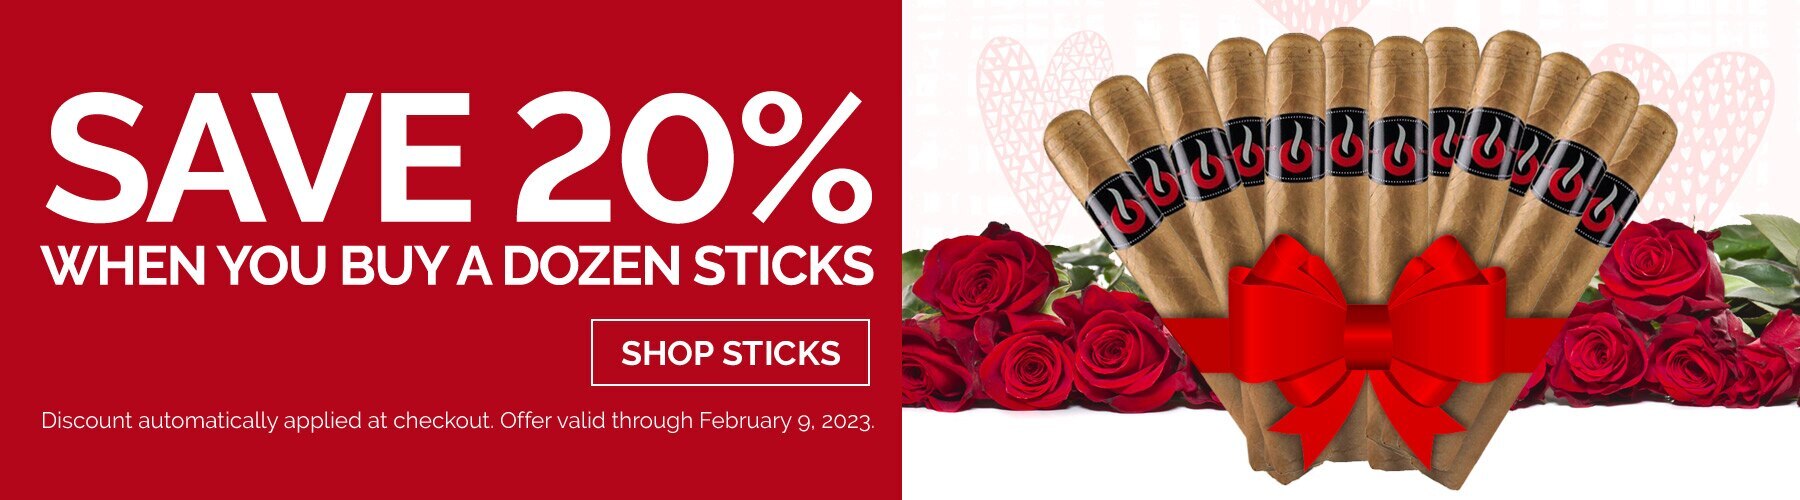 Save 20% When You Buy One Dozen Sticks